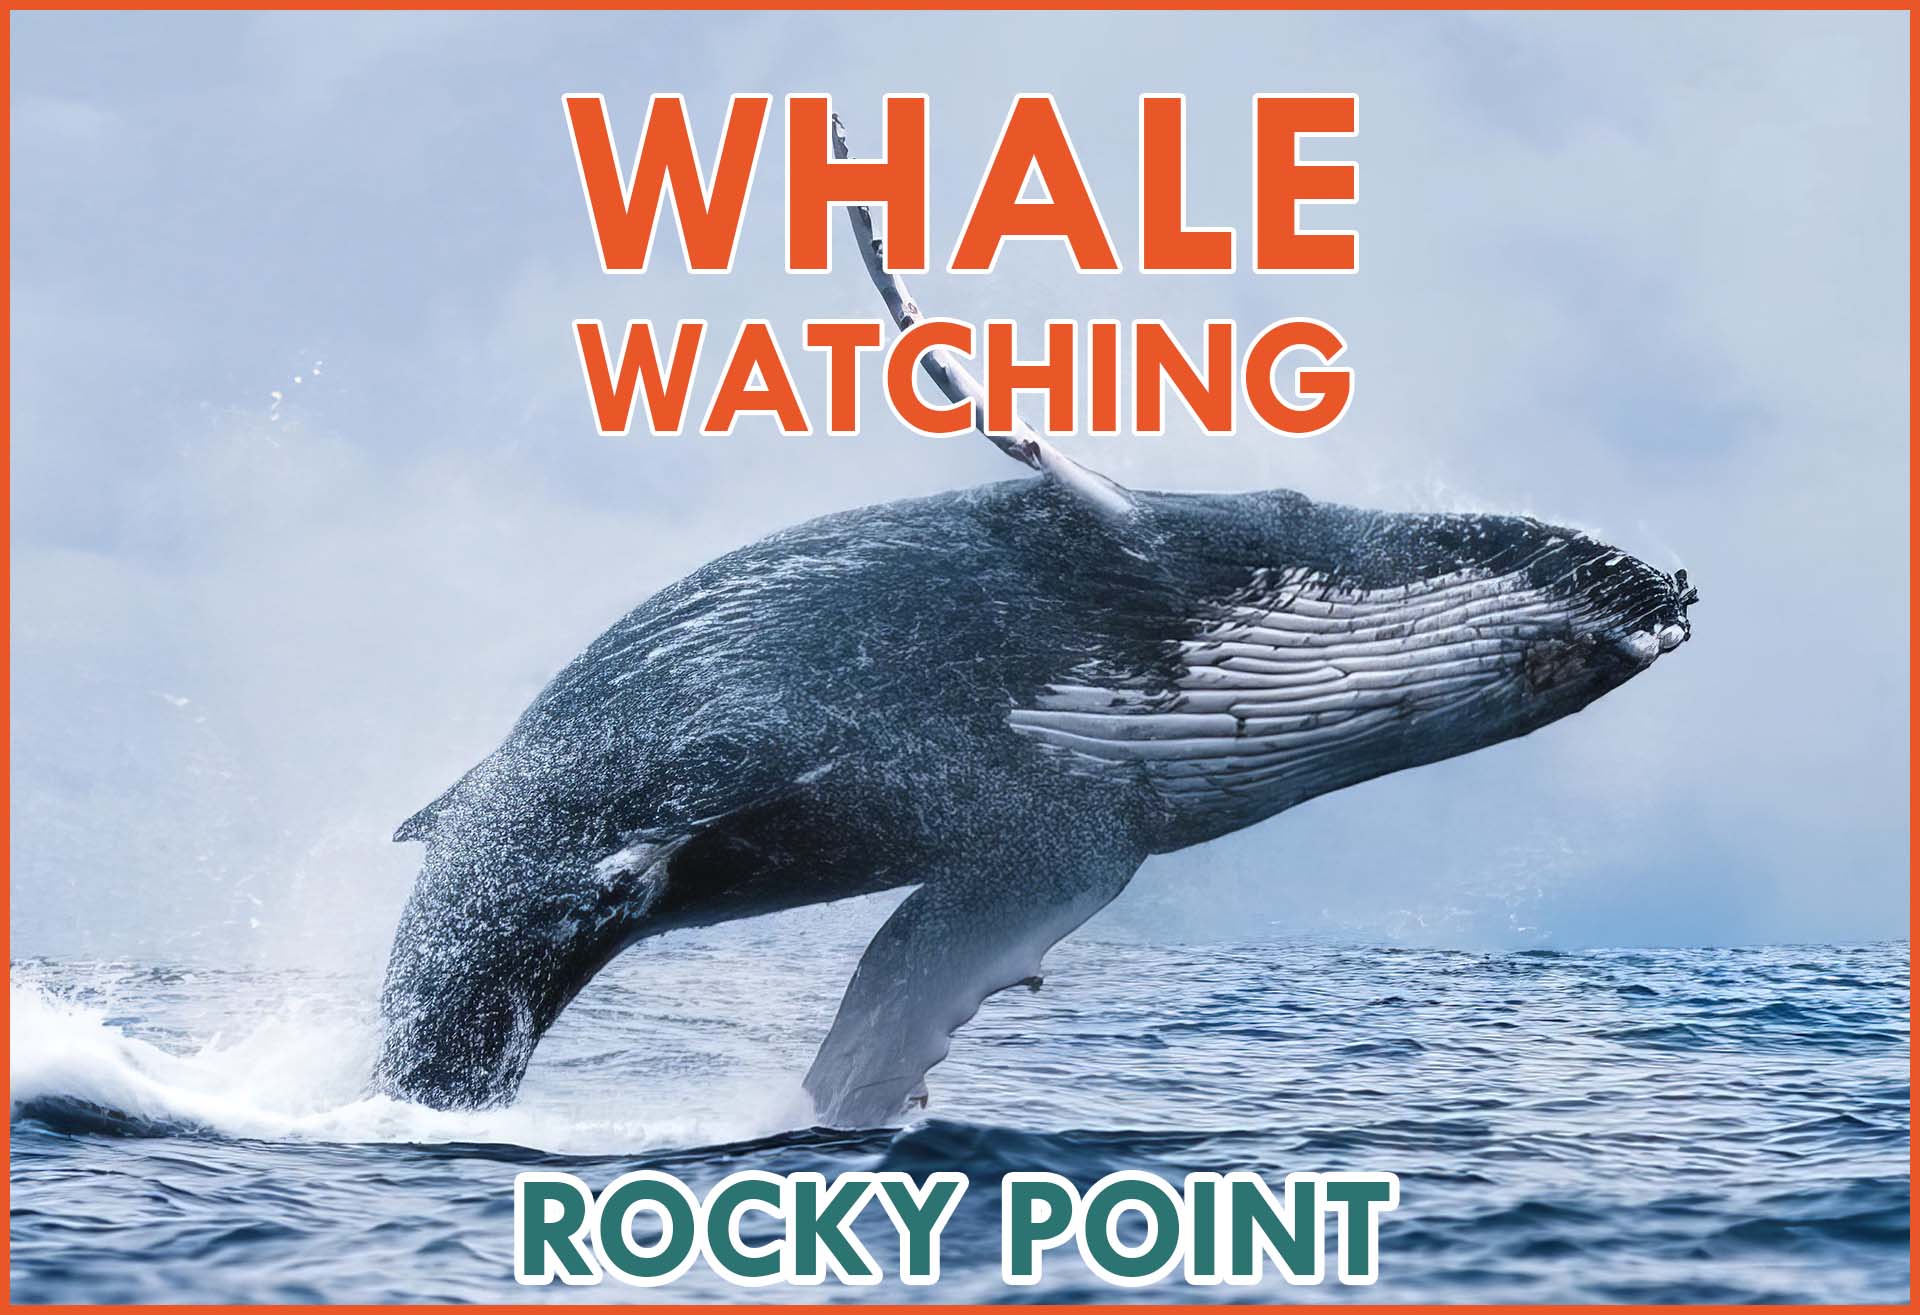 Whale Watching Rocky Point - Sonoran Spa Resort Reservations Puerto Peñasco, Mexico Arizona USA